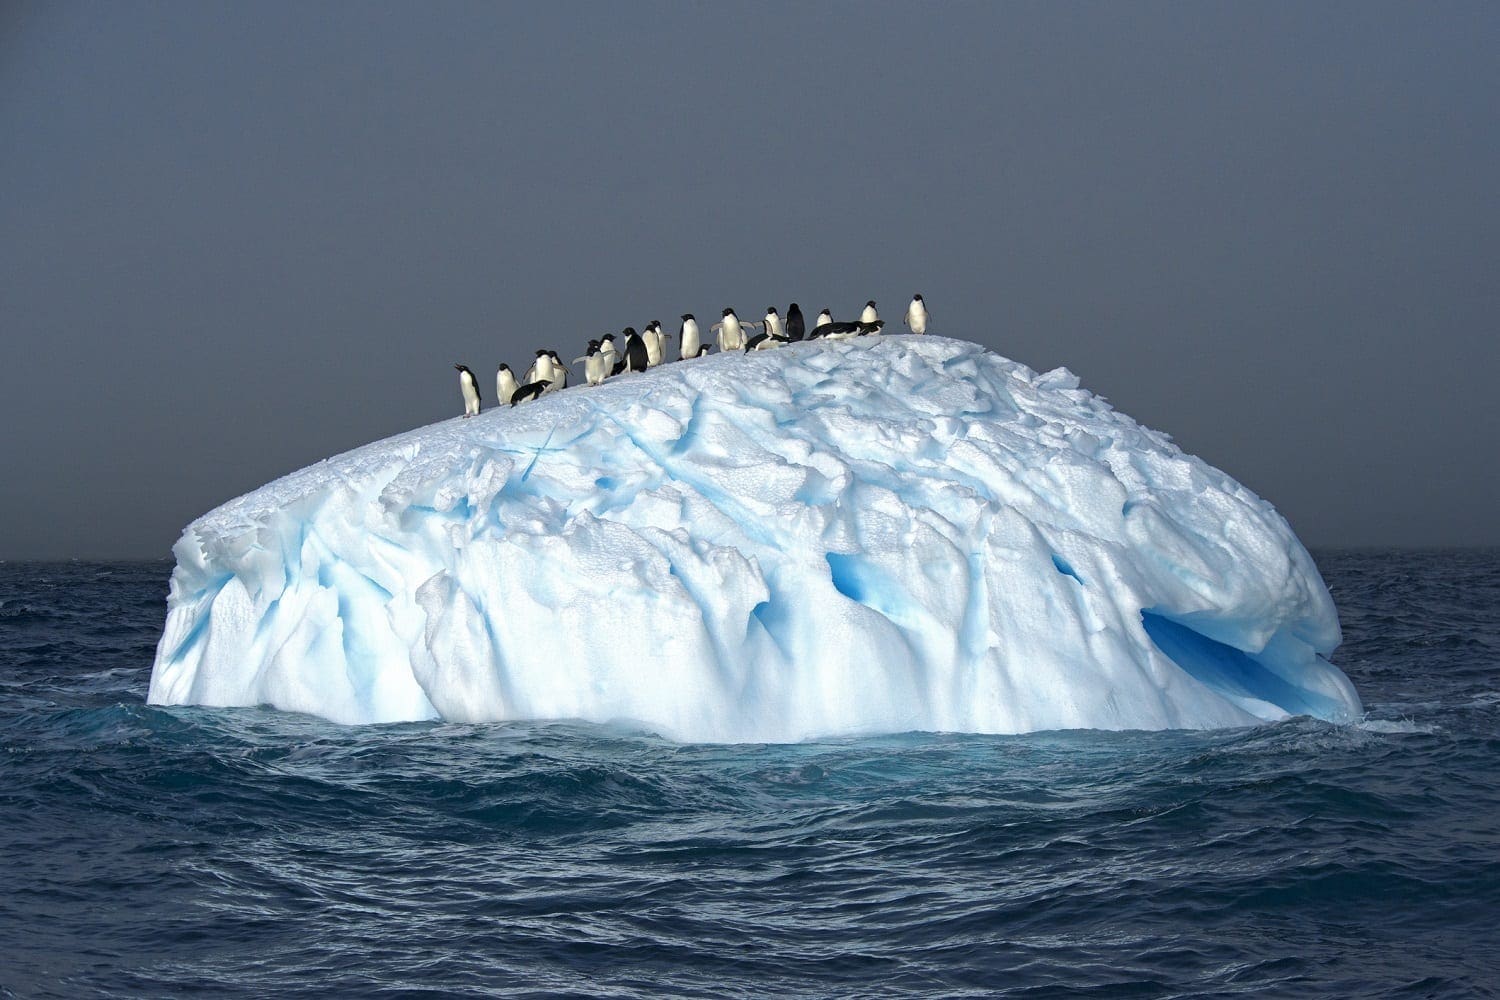 Adelie Penguins on an Iceberg: ID 62125837 © Jonathan R. Green | Dreamstime.com